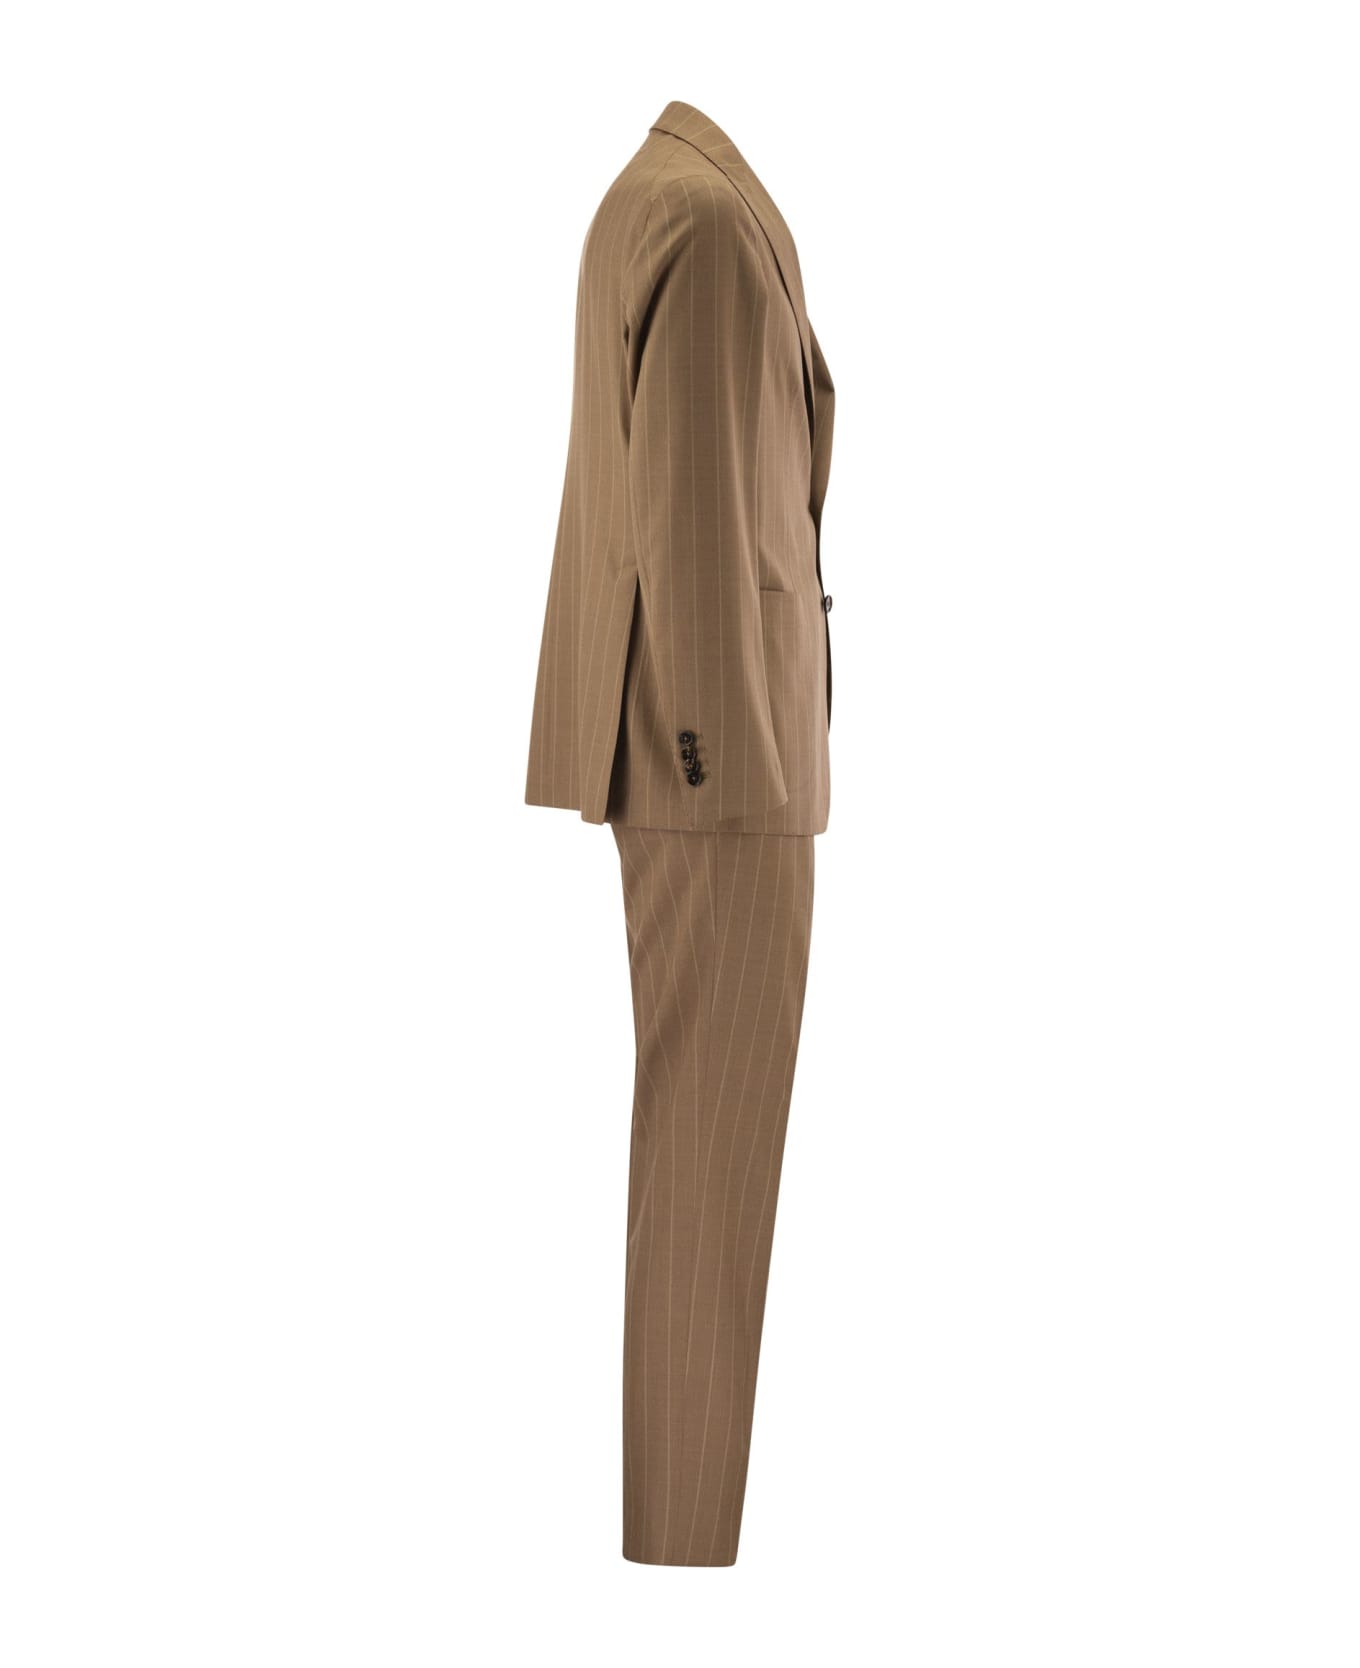 Tagliatore Pinstripe Suit In Wool And Silk - Cognac スーツ